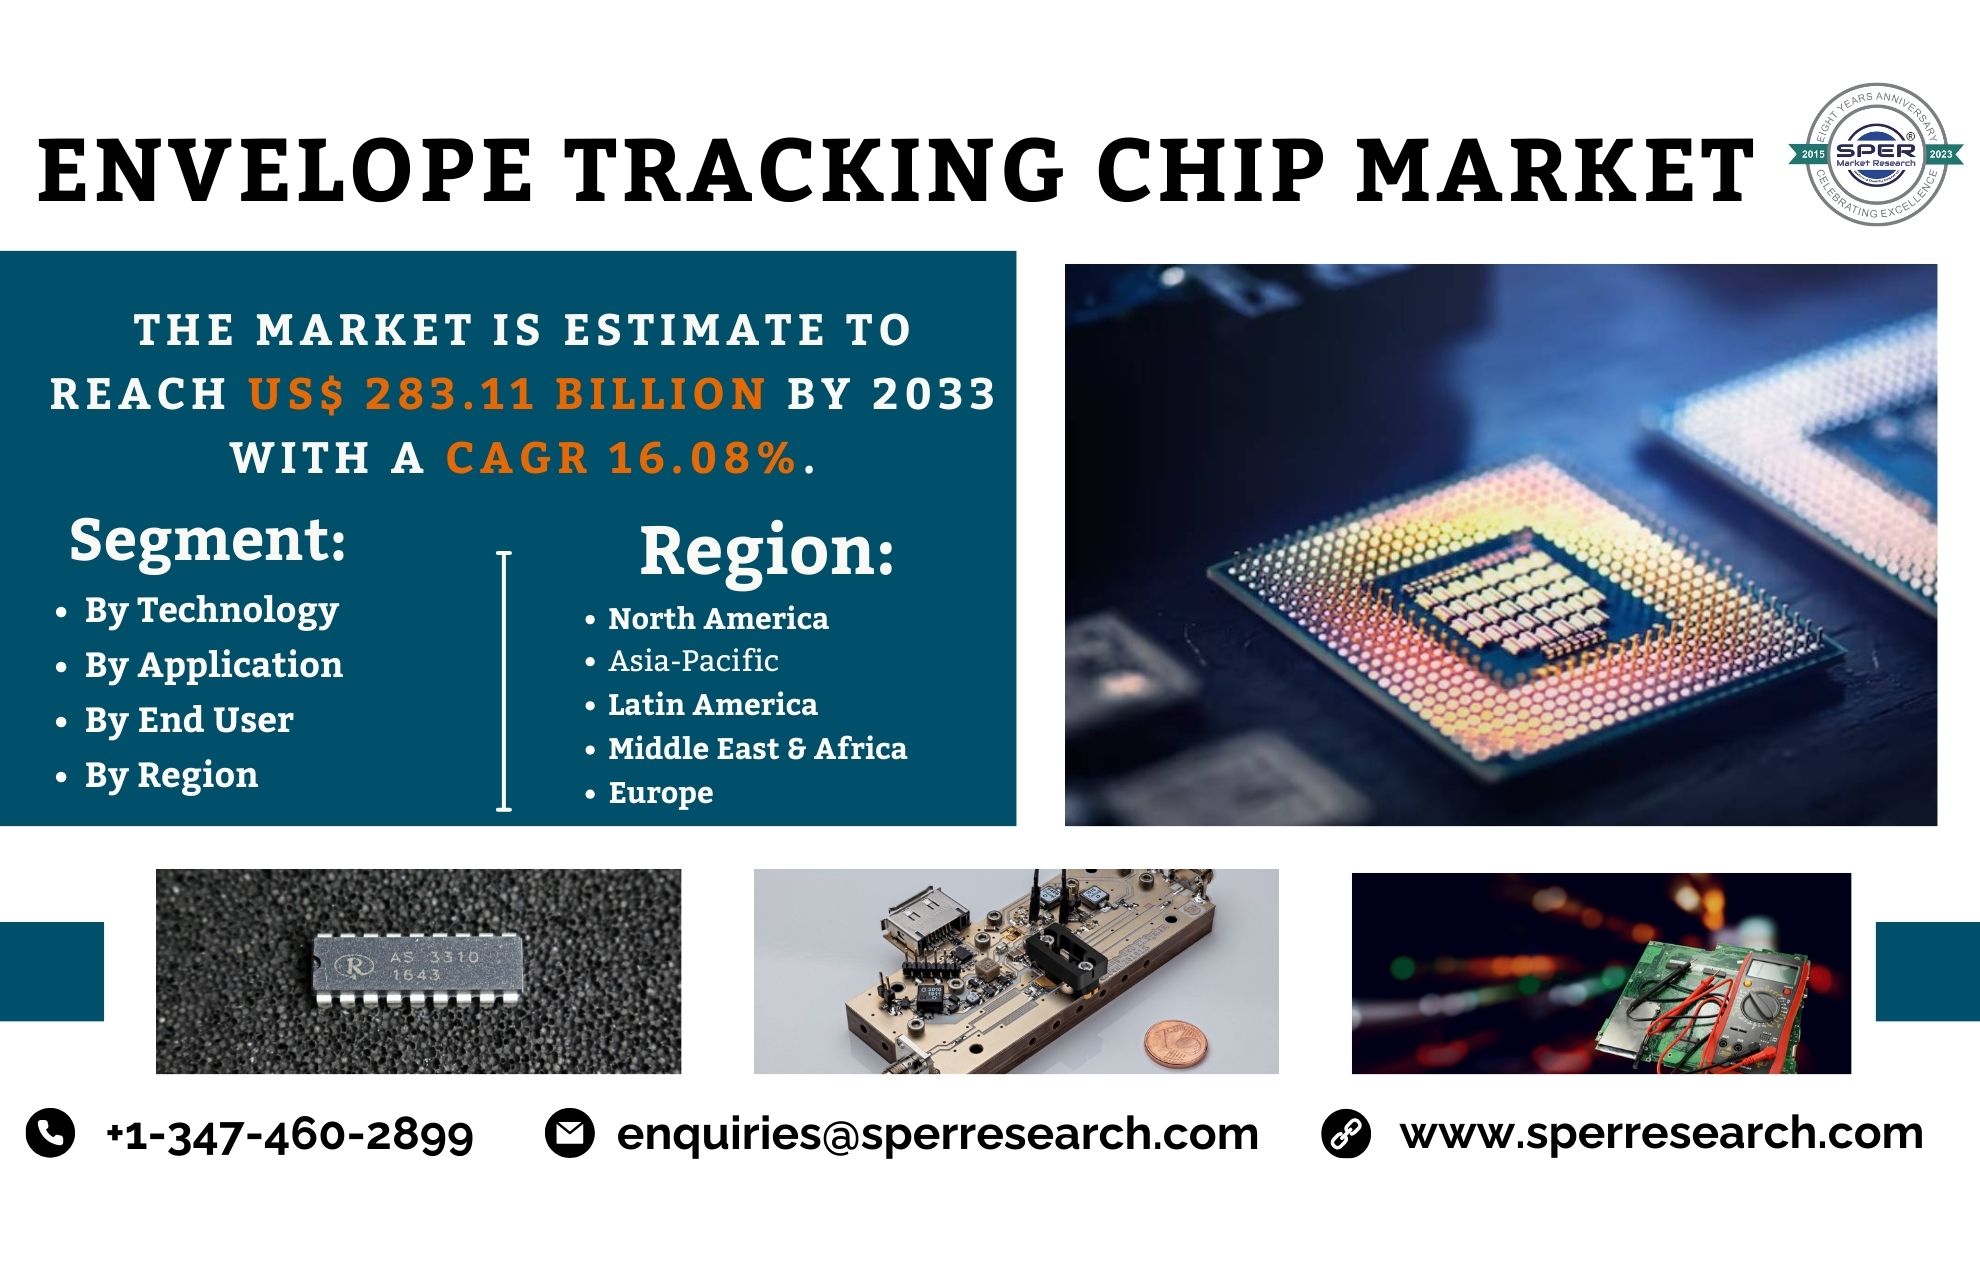 Envelope Tracking Chip Market